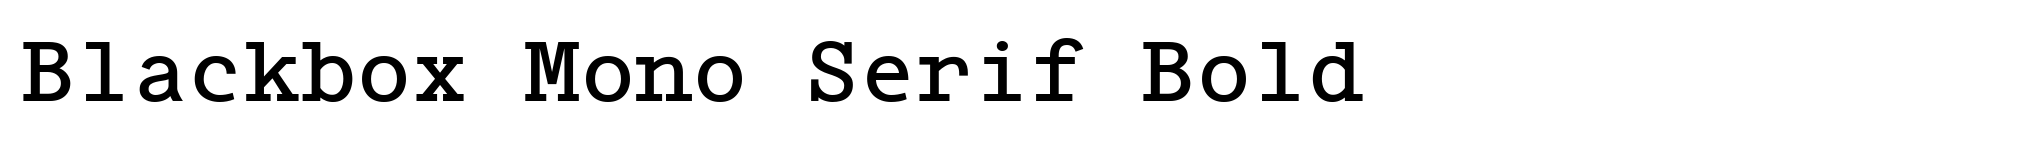 Blackbox Mono Serif Bold image